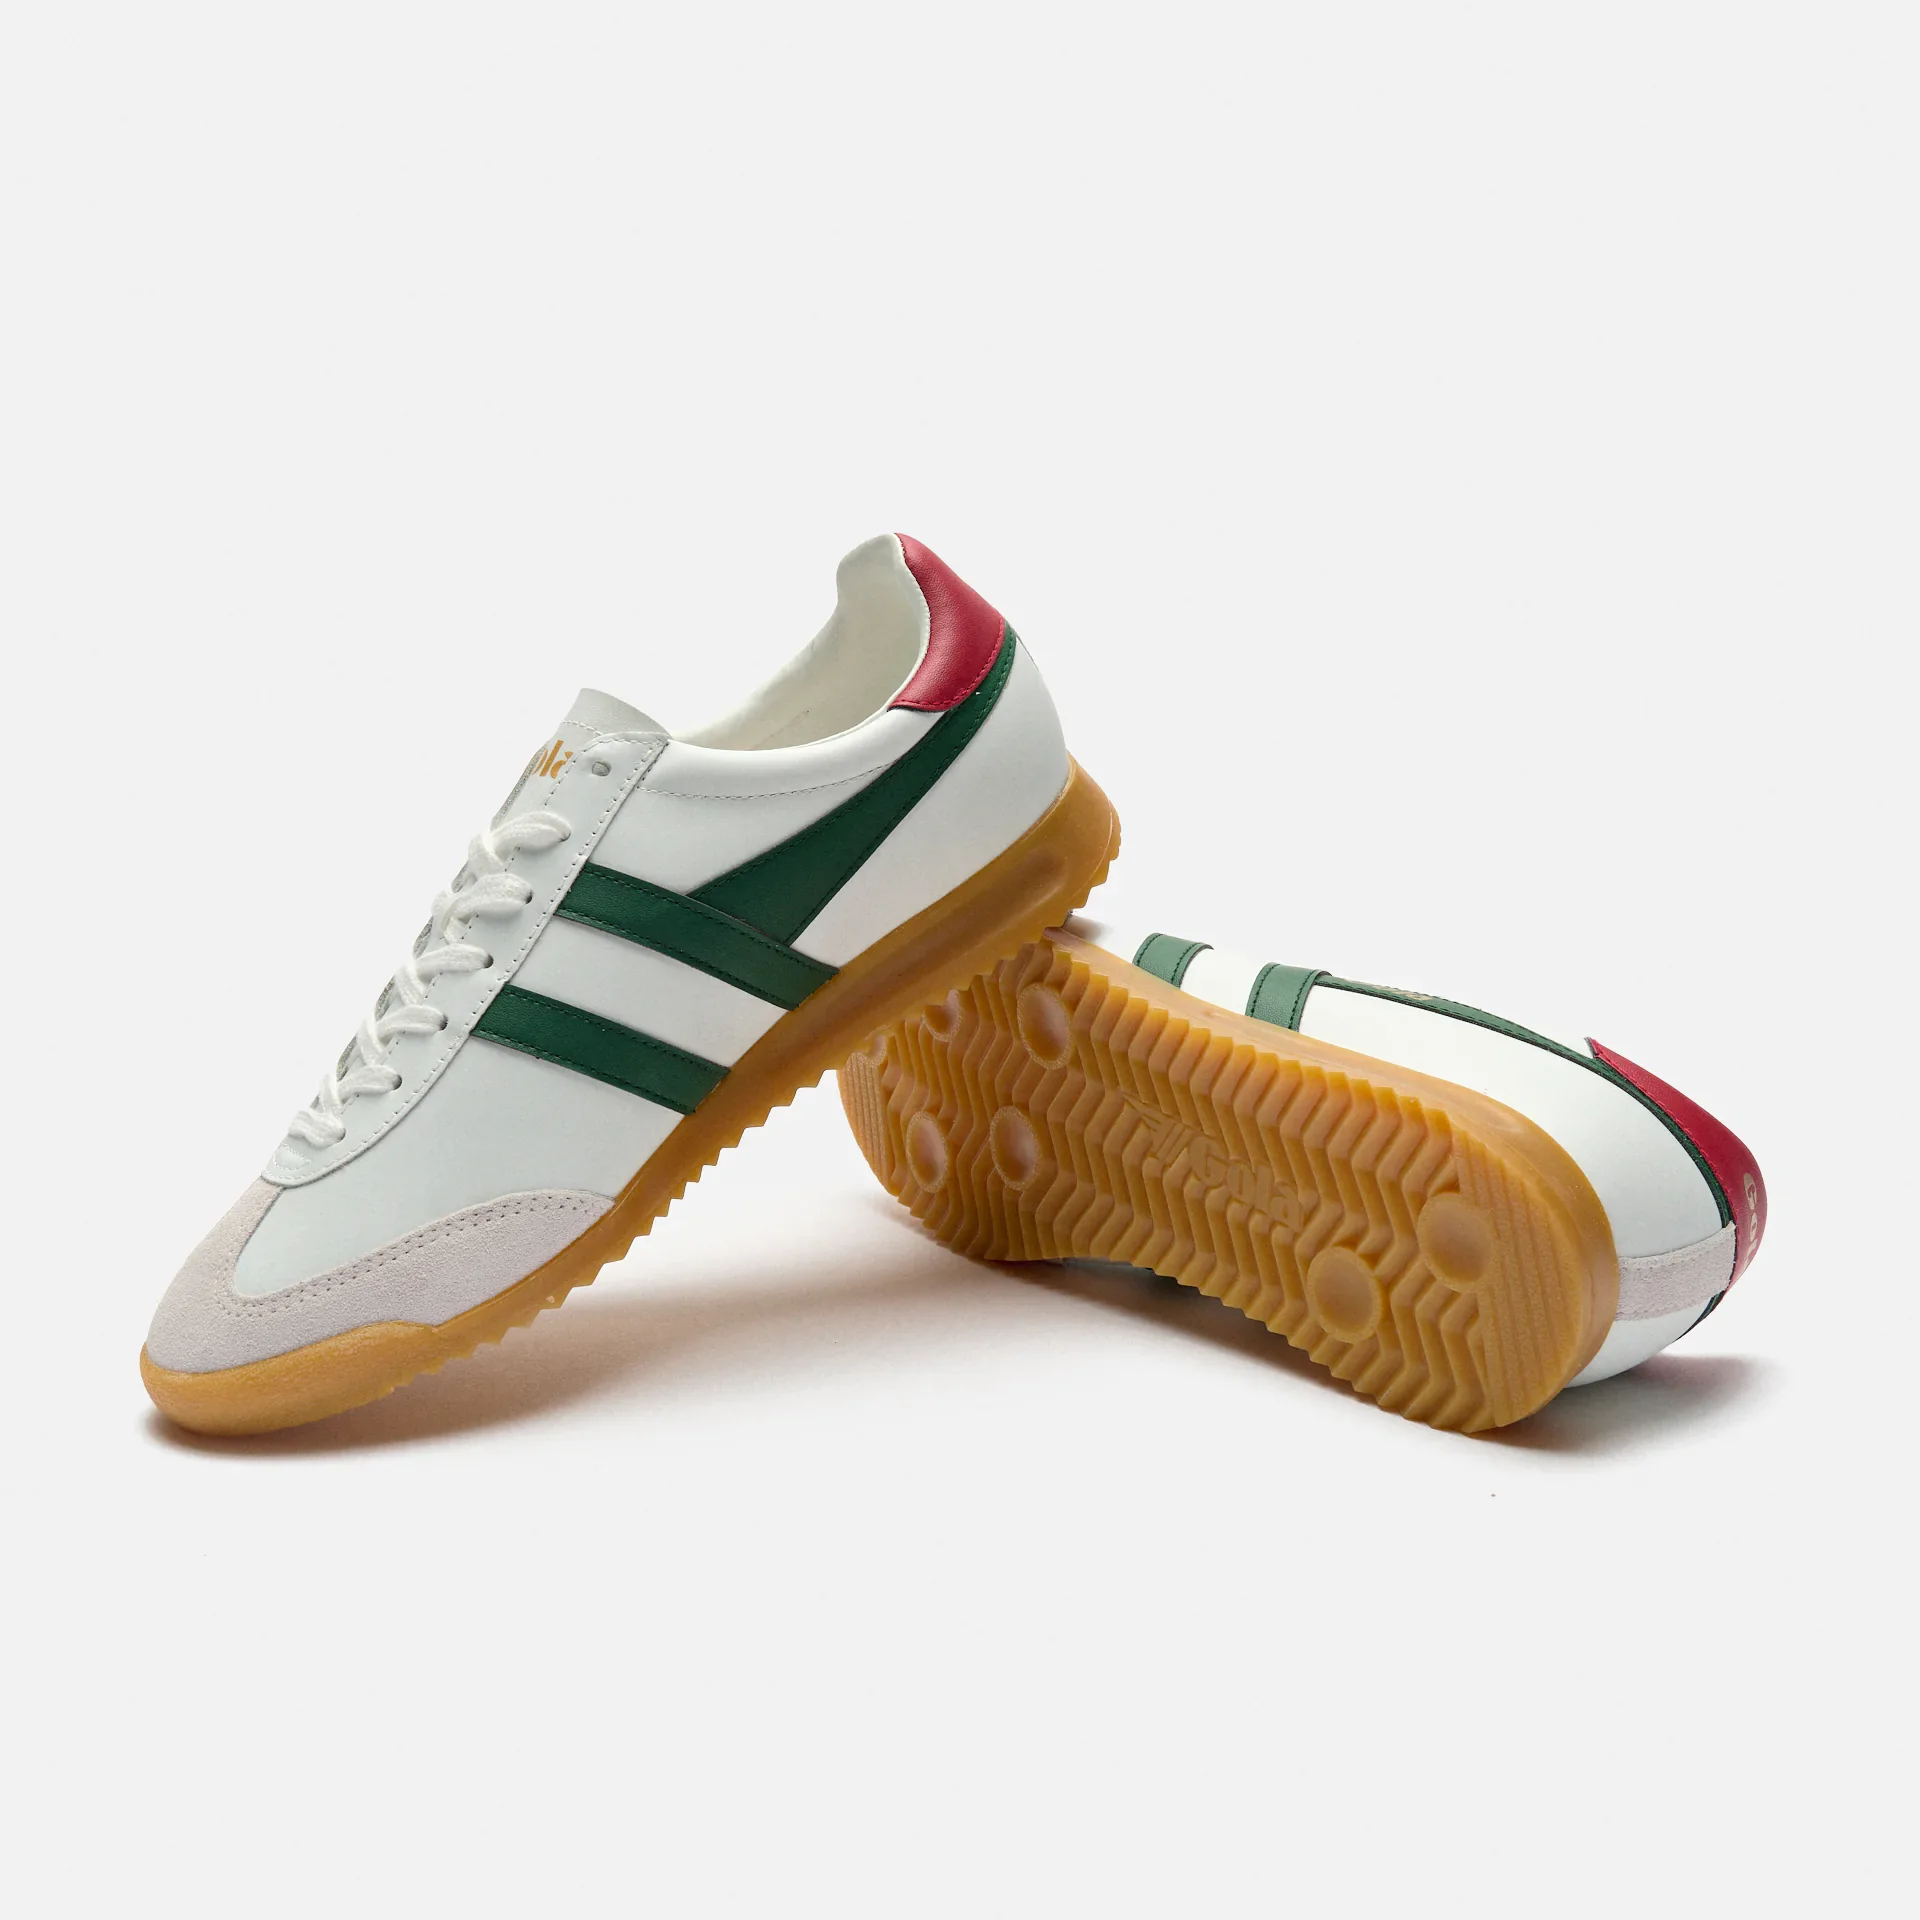 Gola Torpedo Leather Sneaker White/Evergreen/Deep Red